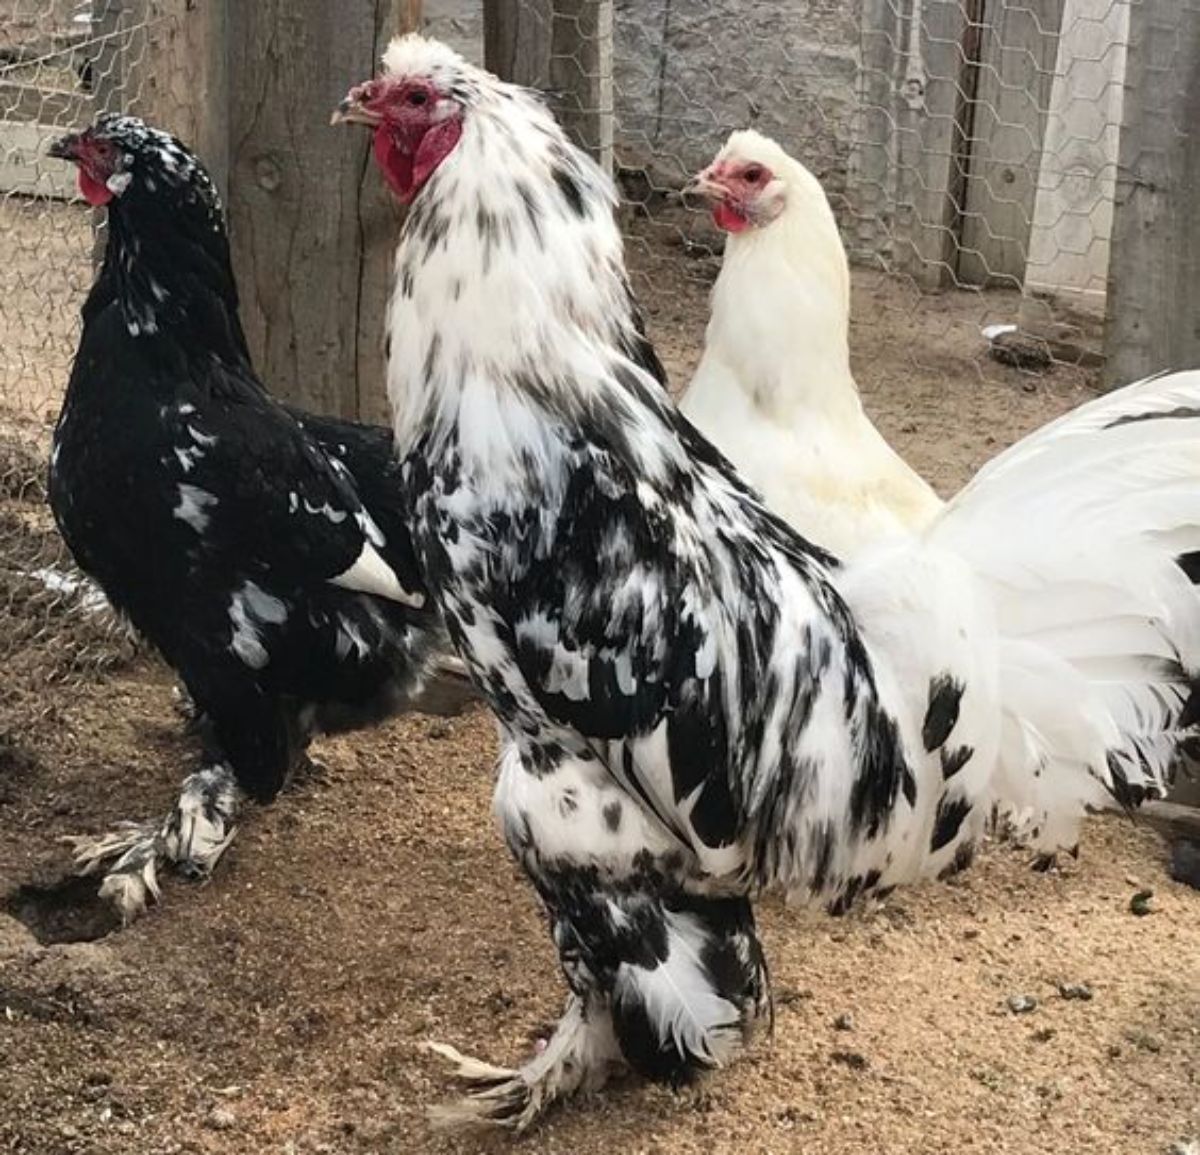 Three Breda hens in a backyard.